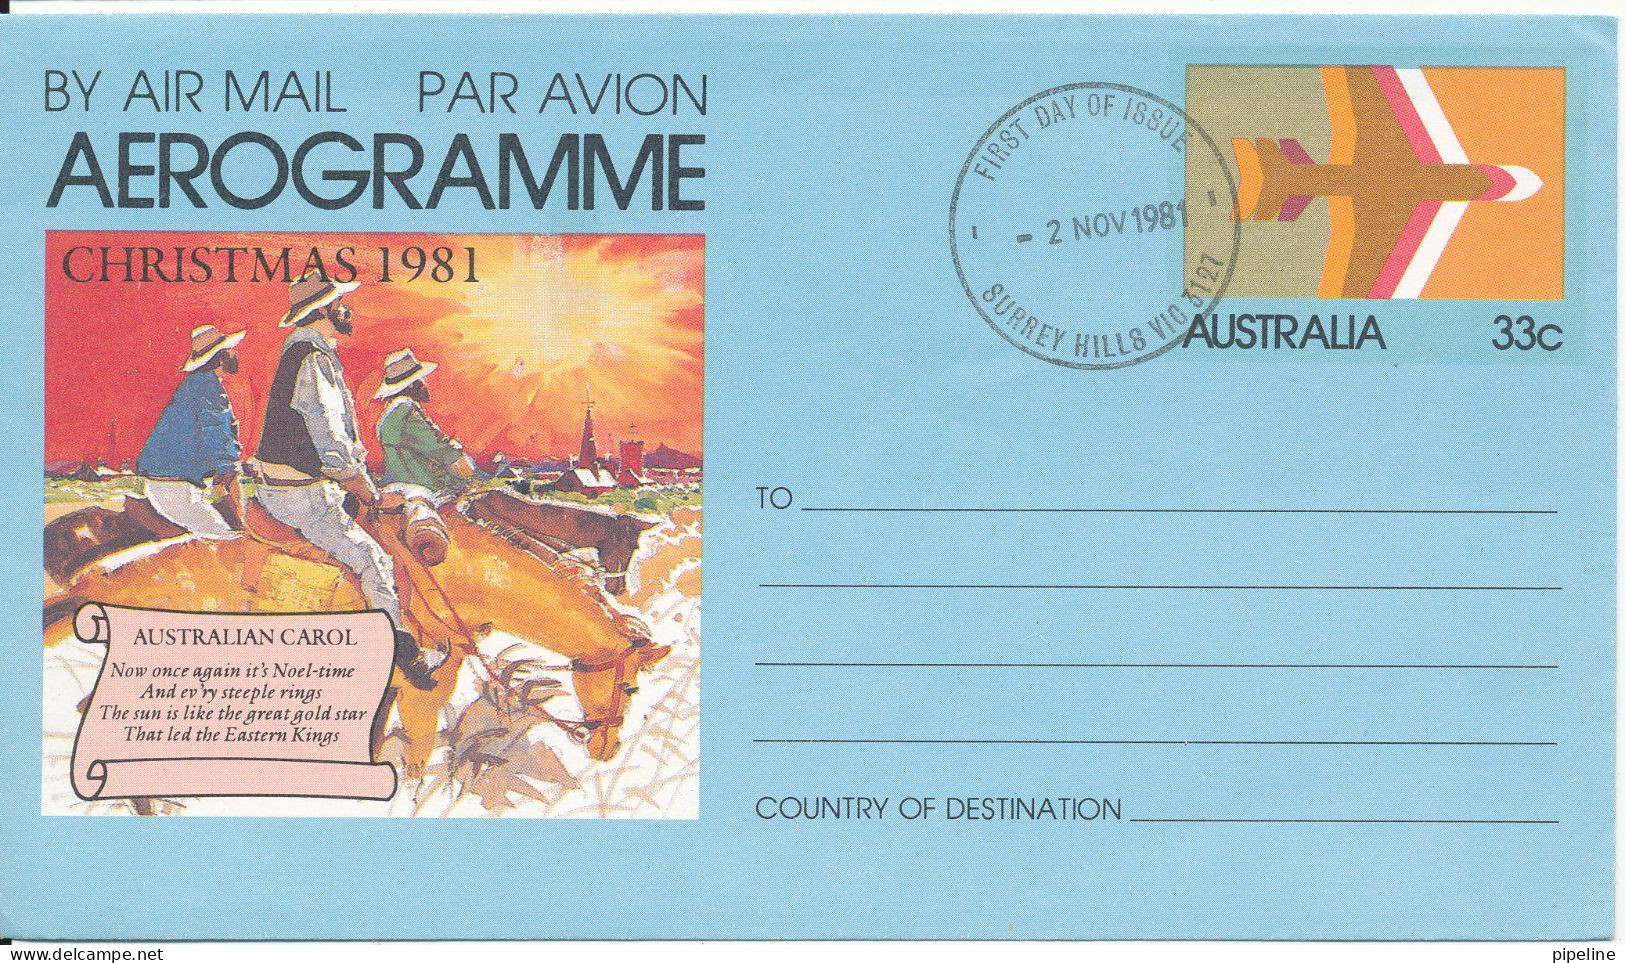 Australia Aerogramme FDC CHRISTMAS 1981 2-11-1981 Nice Christmas Cachet - Luchtpostbladen